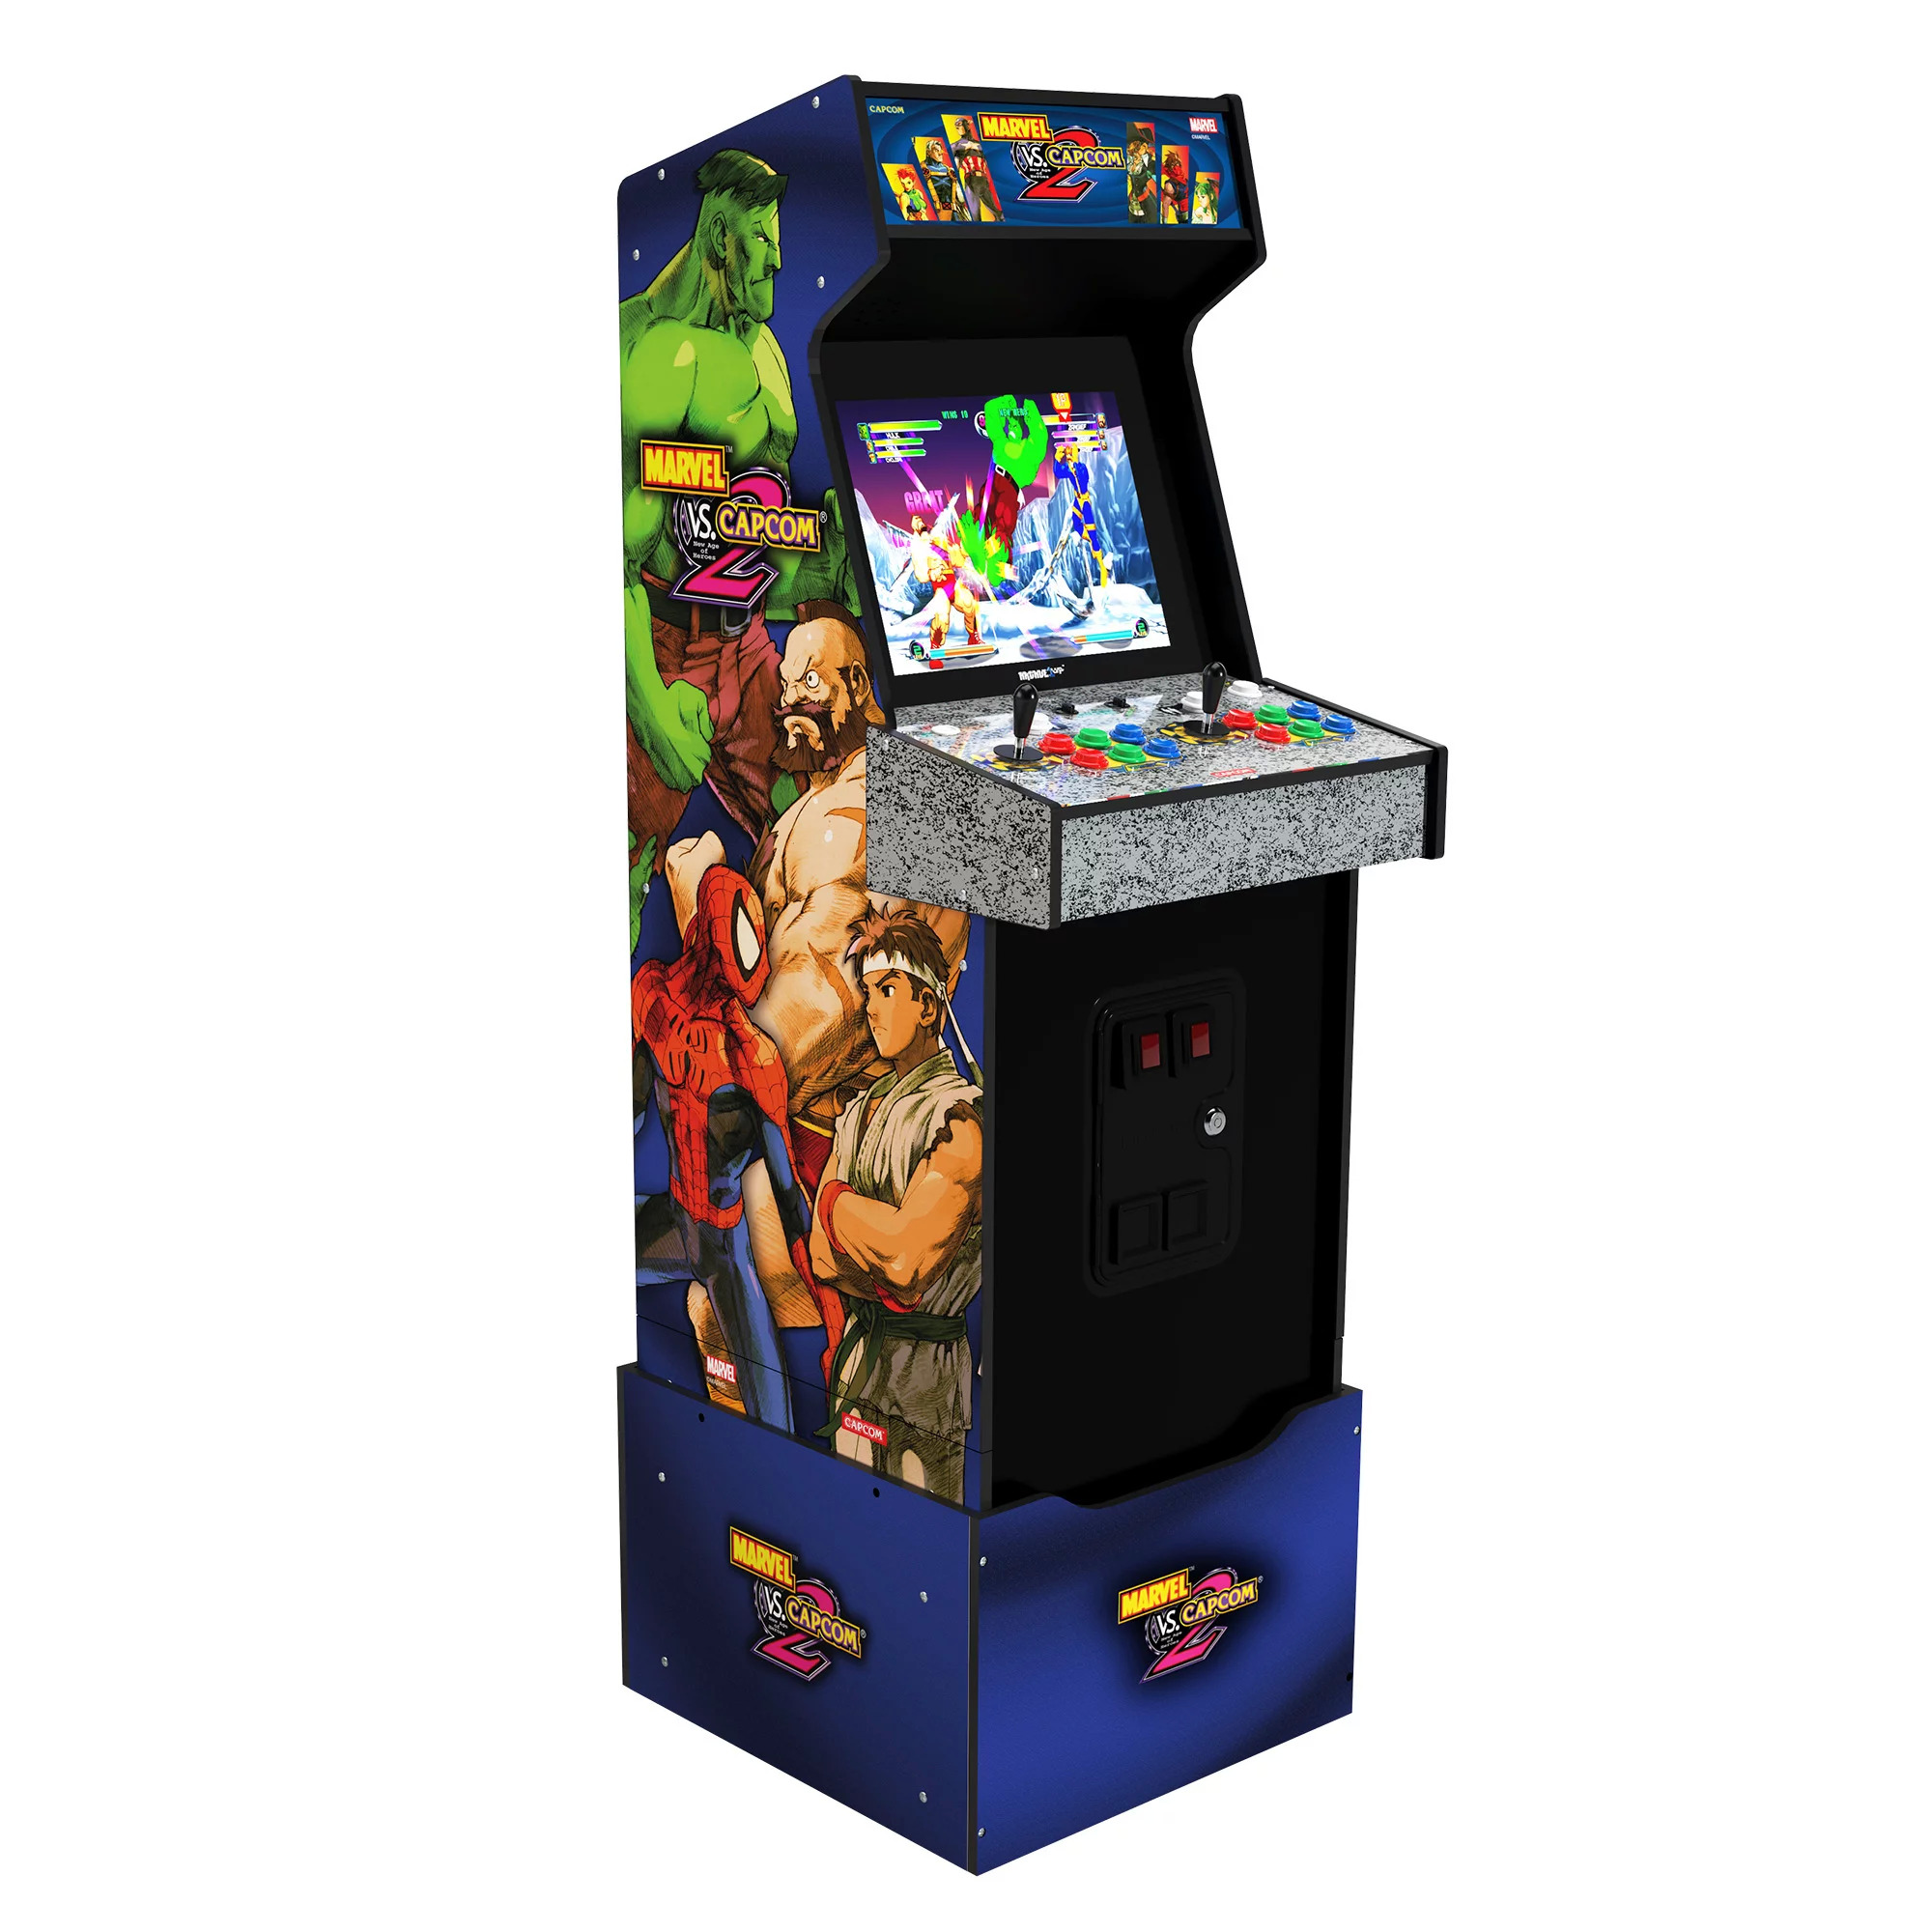 Arcade1up Marvel VS Capcom 2 $599 - Back in Stock at Walmart.com $599.99